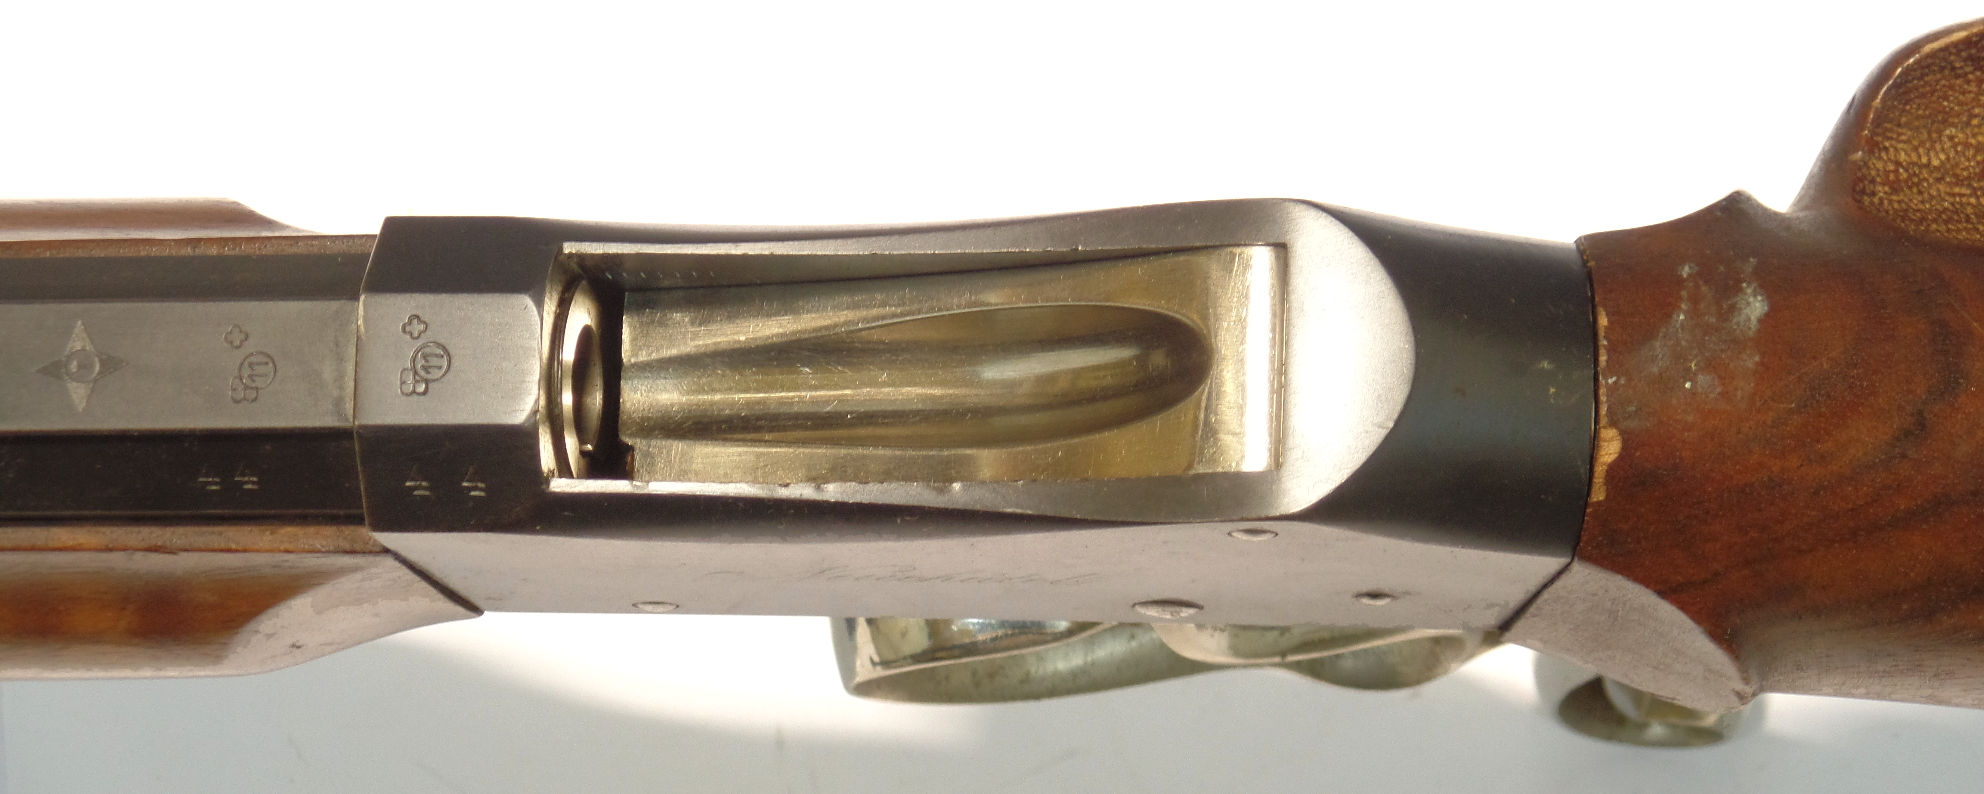 Carabine Match type Martini calibre 7.5x55 GP11